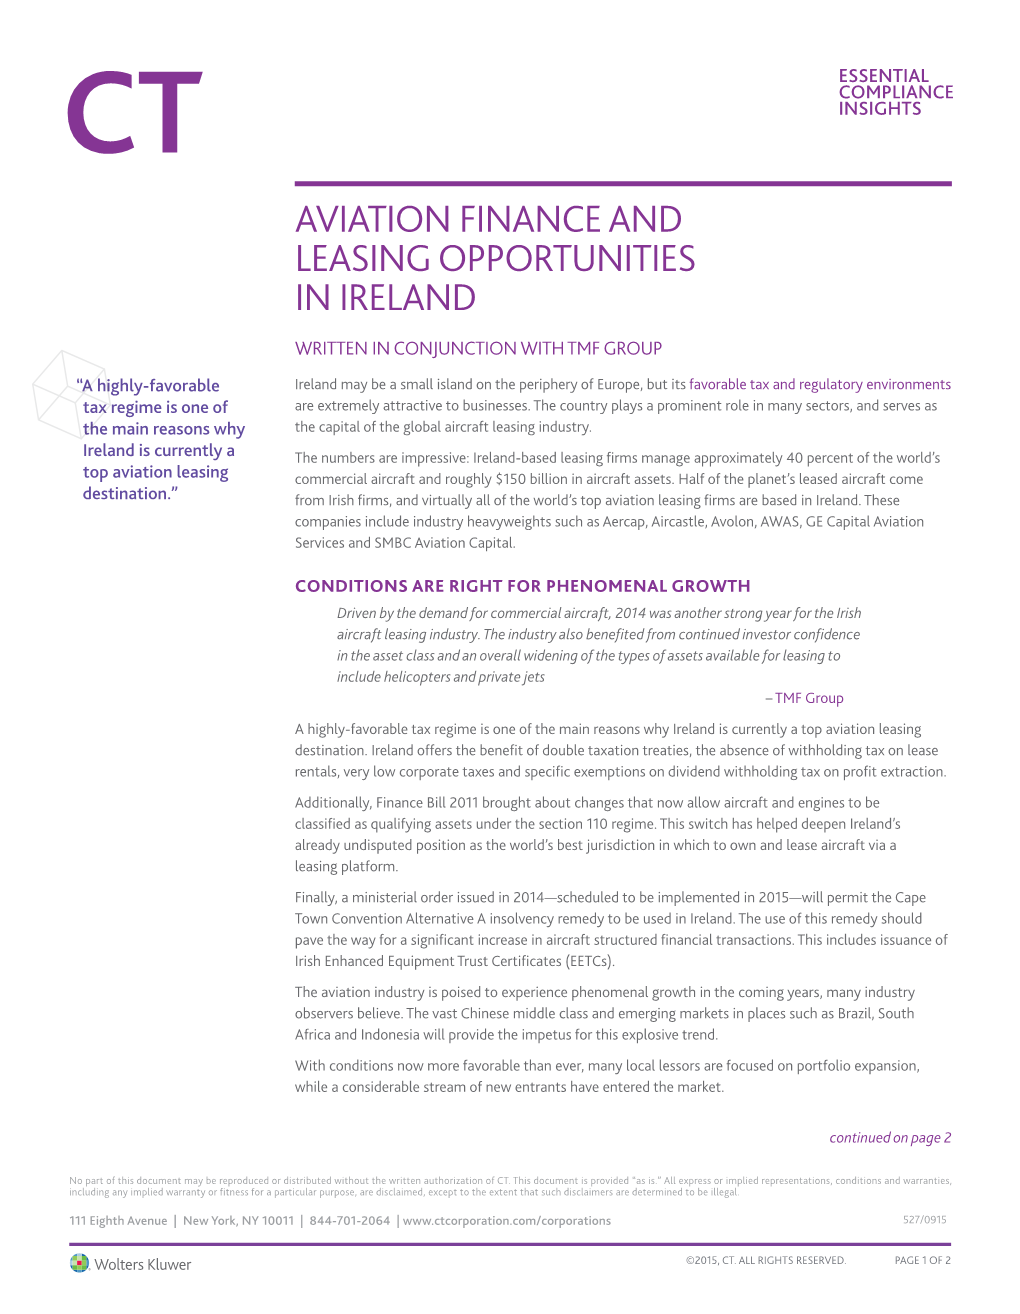 Aviation Finance & Leasing Opportunities in Ireland | CT